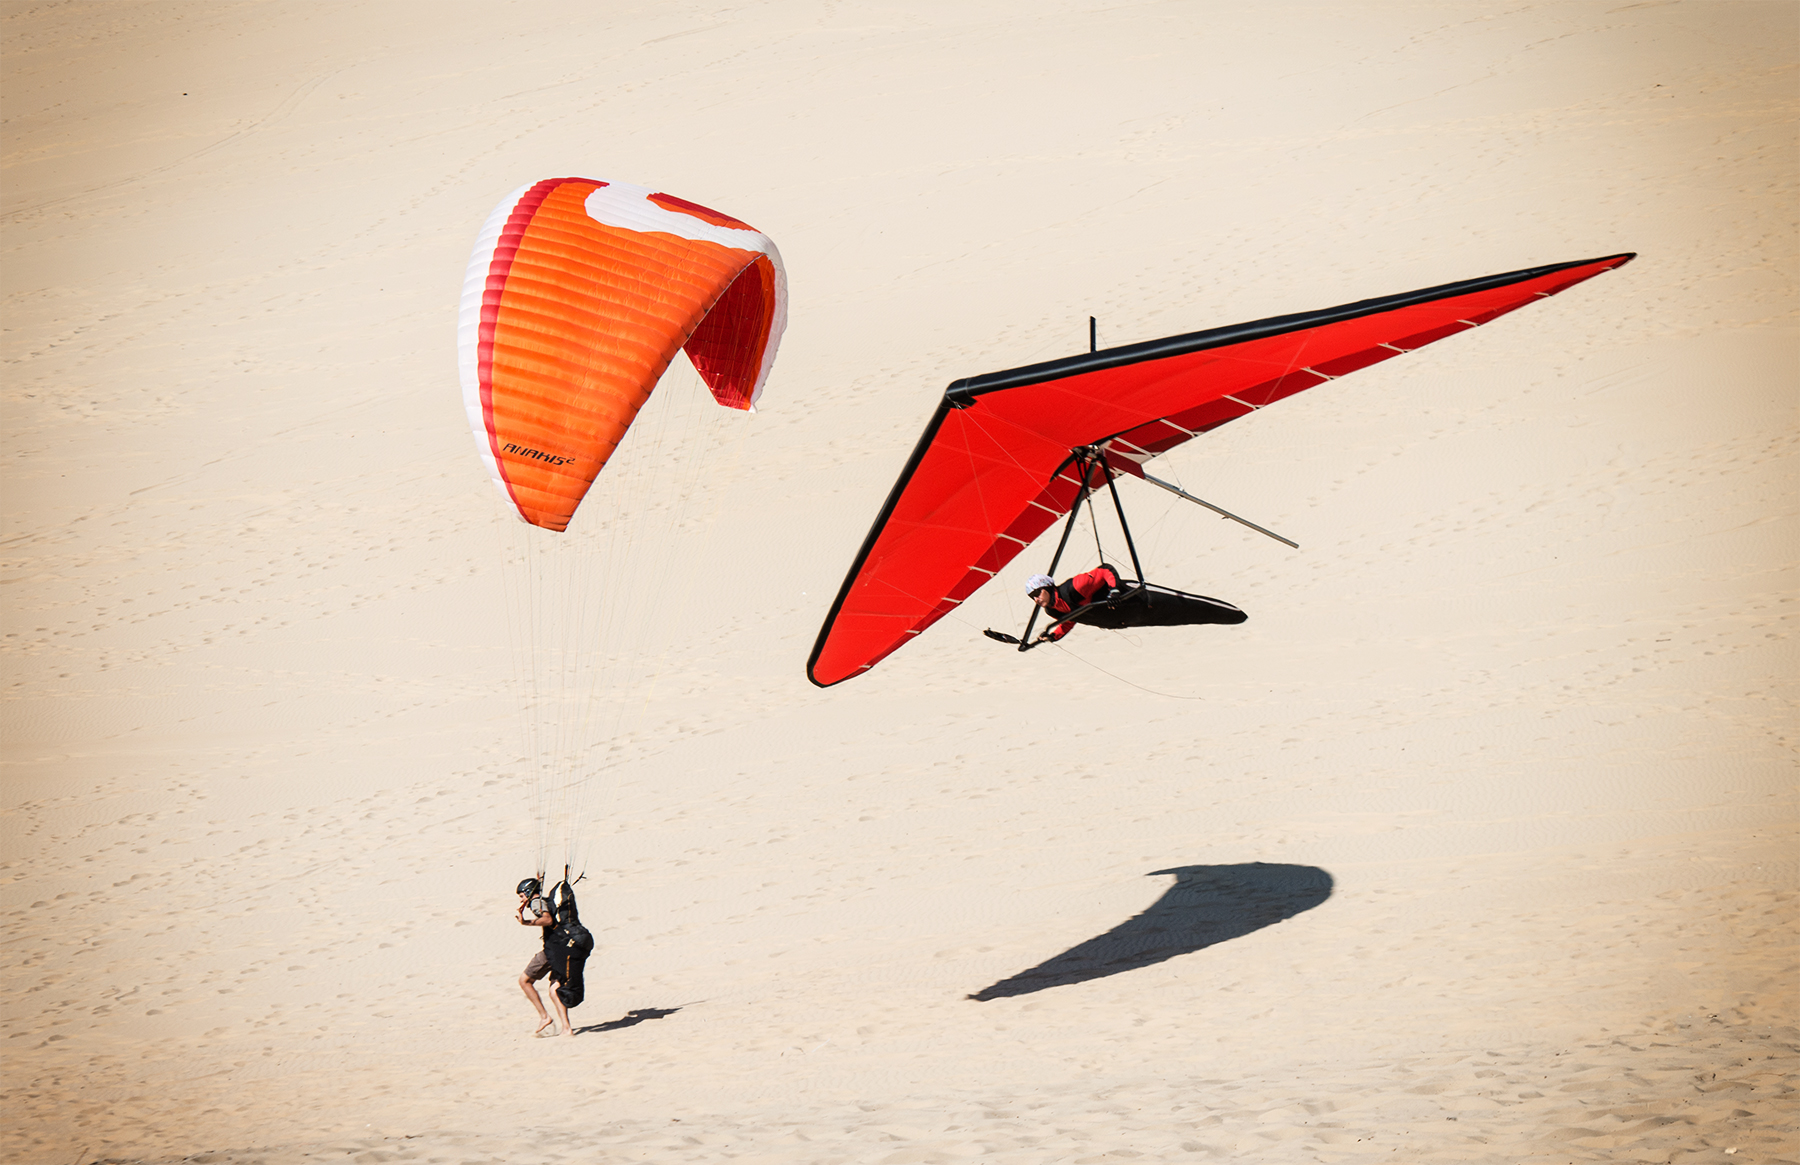 Gerolf-on-Geko-with-a-paraglider_filter